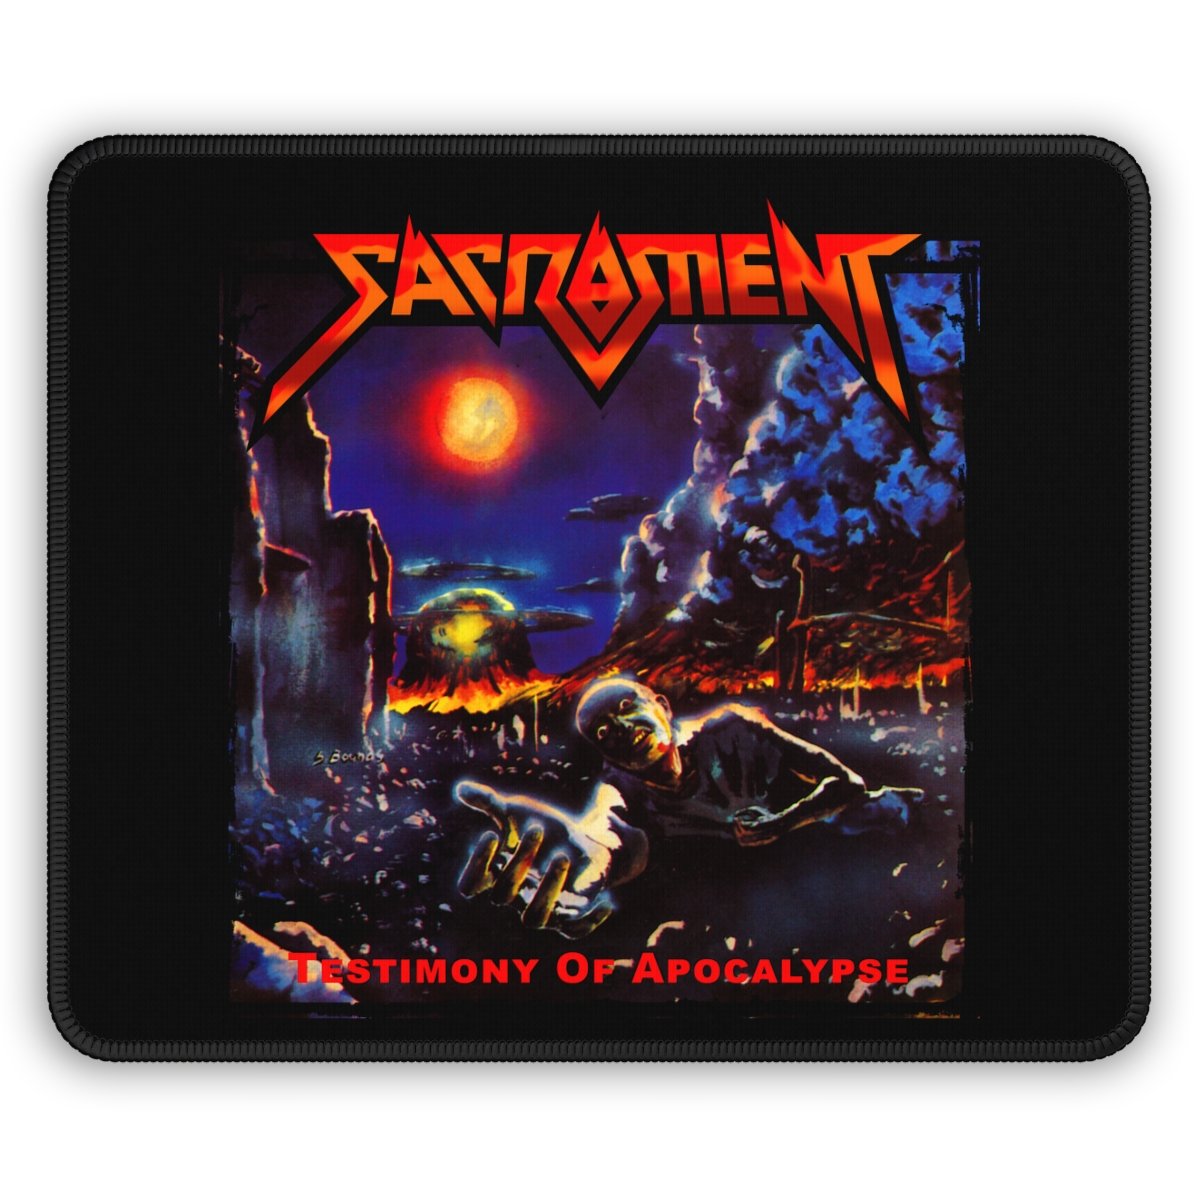 Sacrament – Testimony of Apocalypse Gaming Mouse Pad